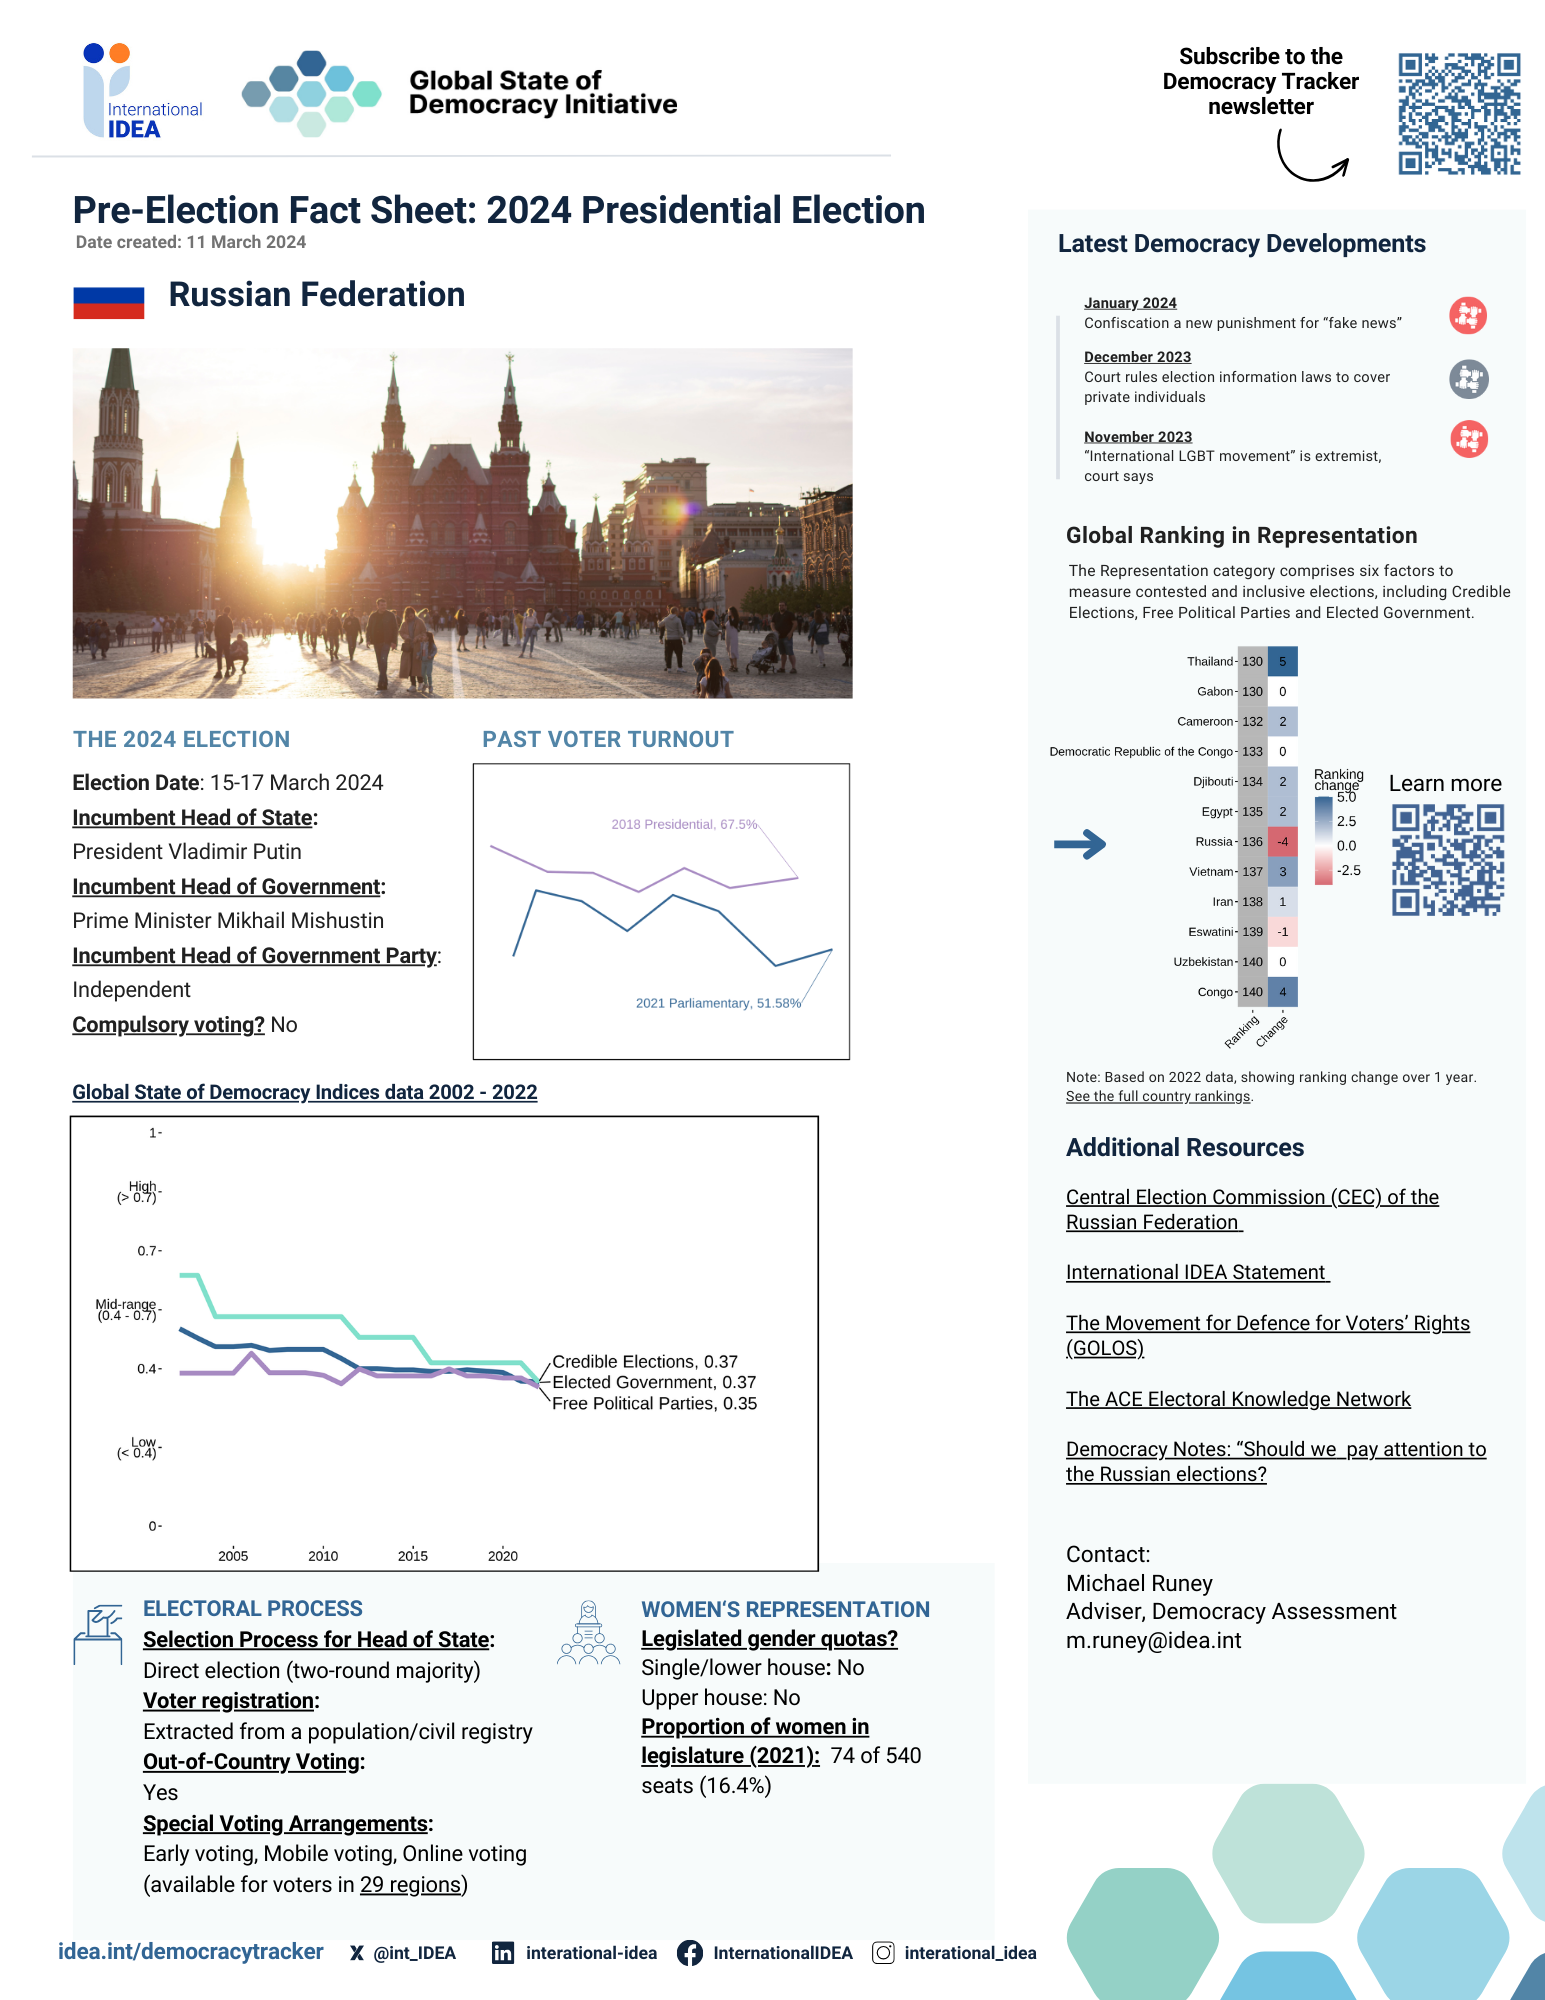 Russia pre-election fact sheet